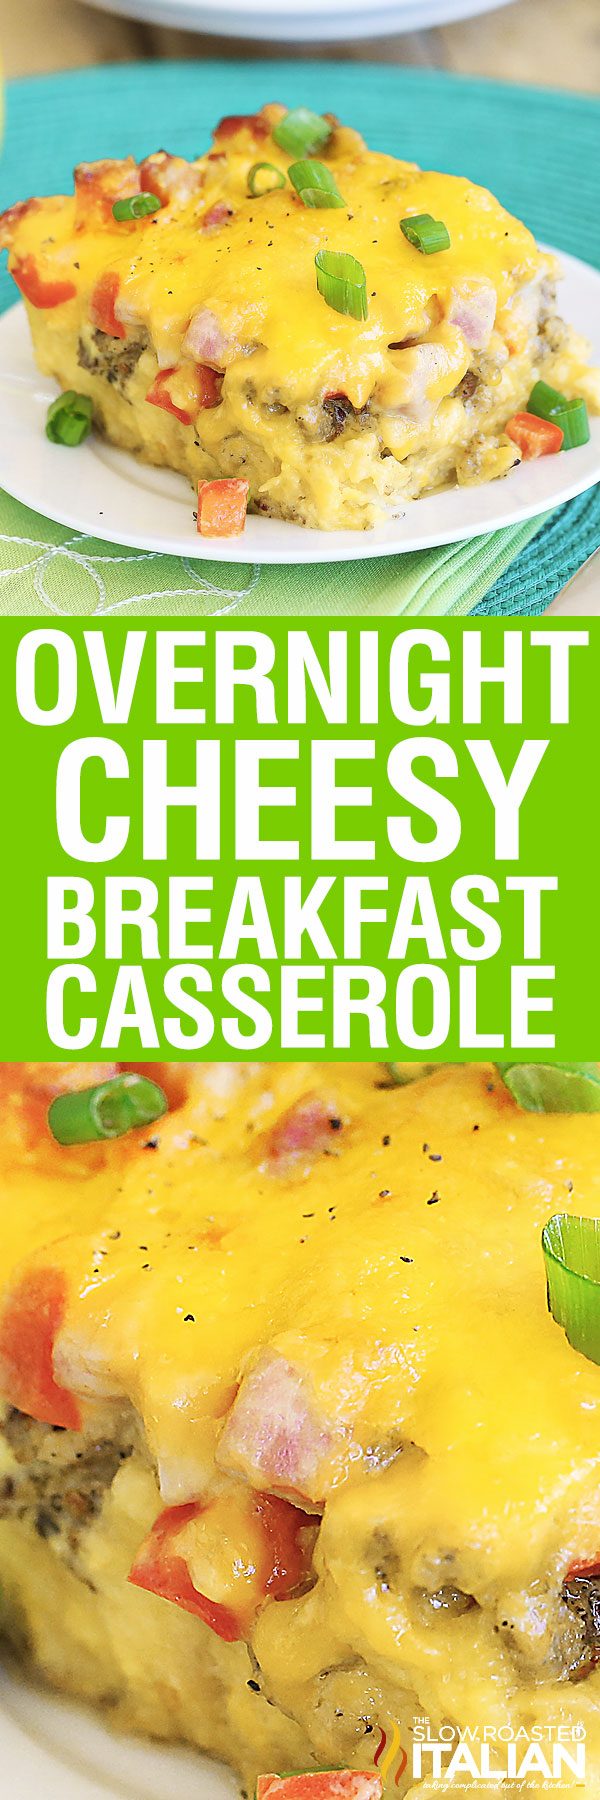 overnight-cheesy-breakfast-casserole-pin-7948020